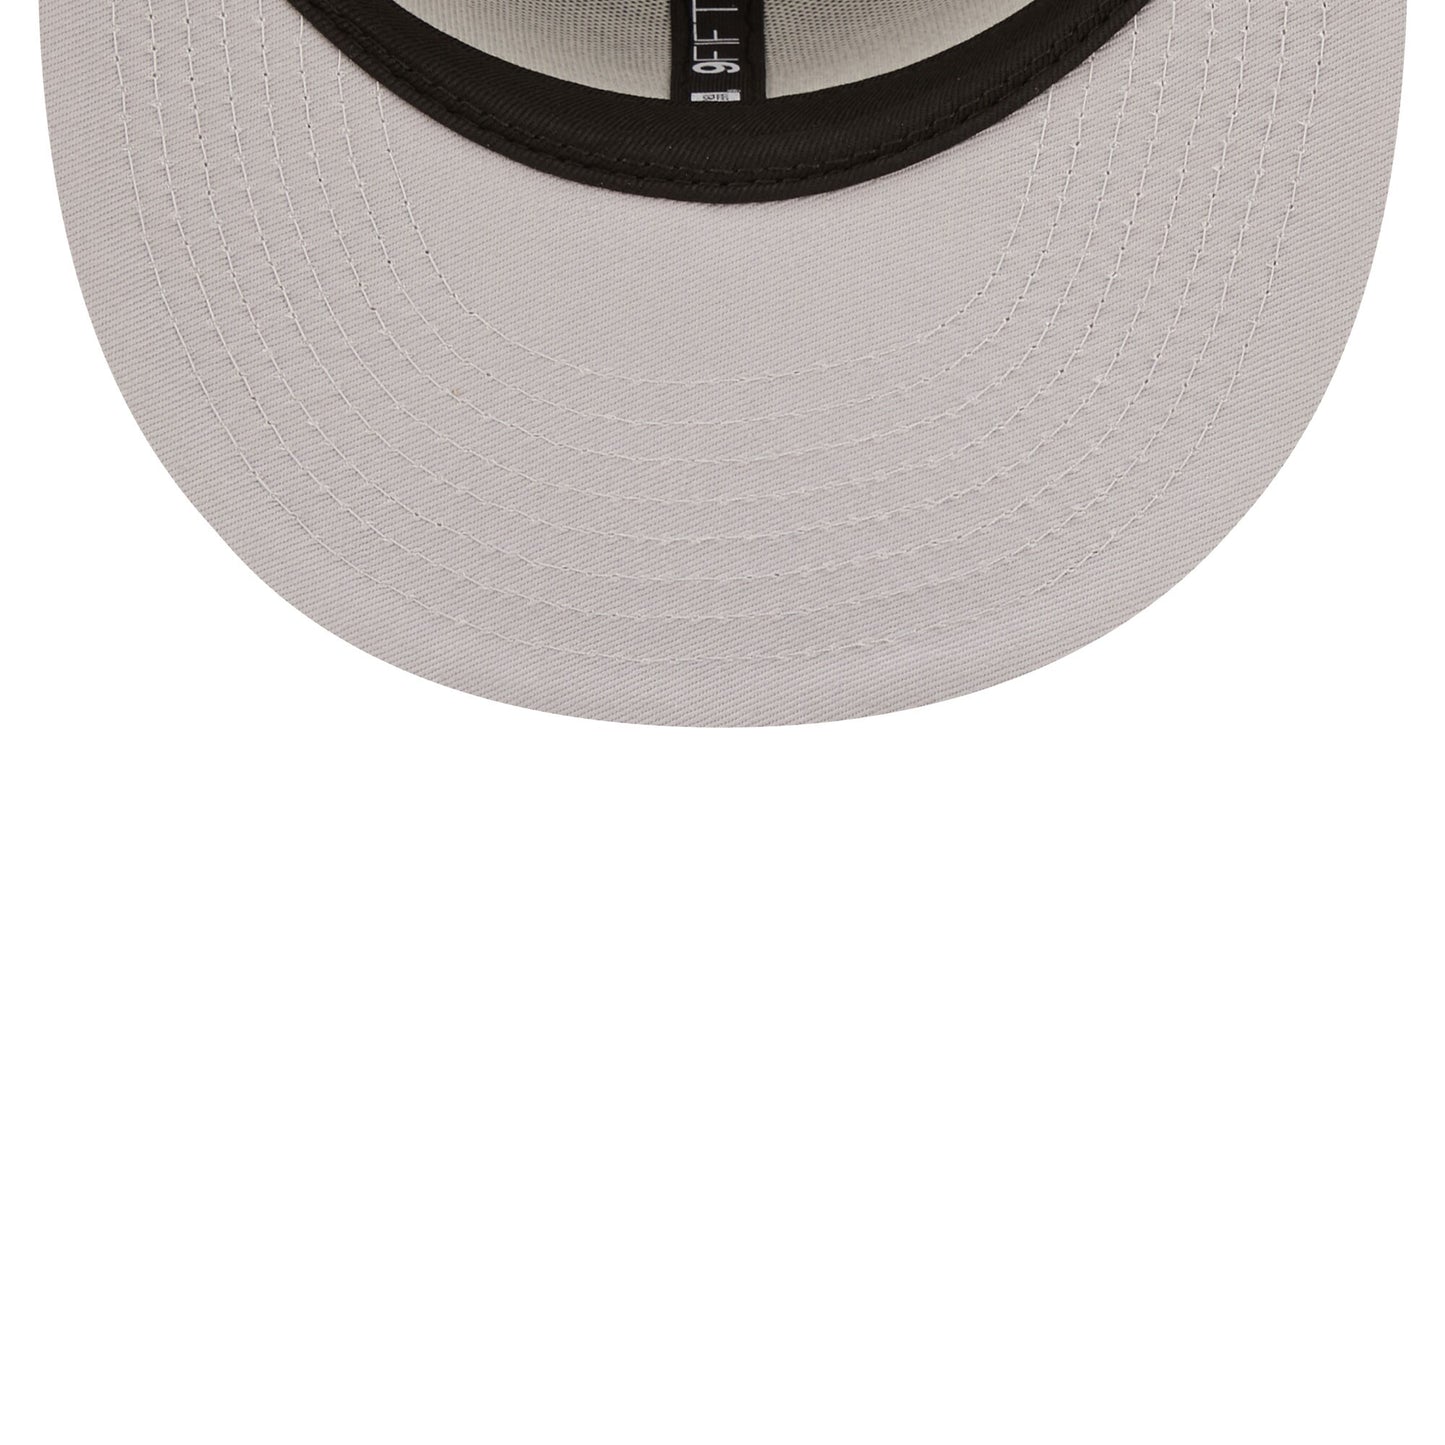 Men's Los Angeles Dodgers New Era Royal/Charcoal Team Script 9FIFTY Adjustable Snapback Hat